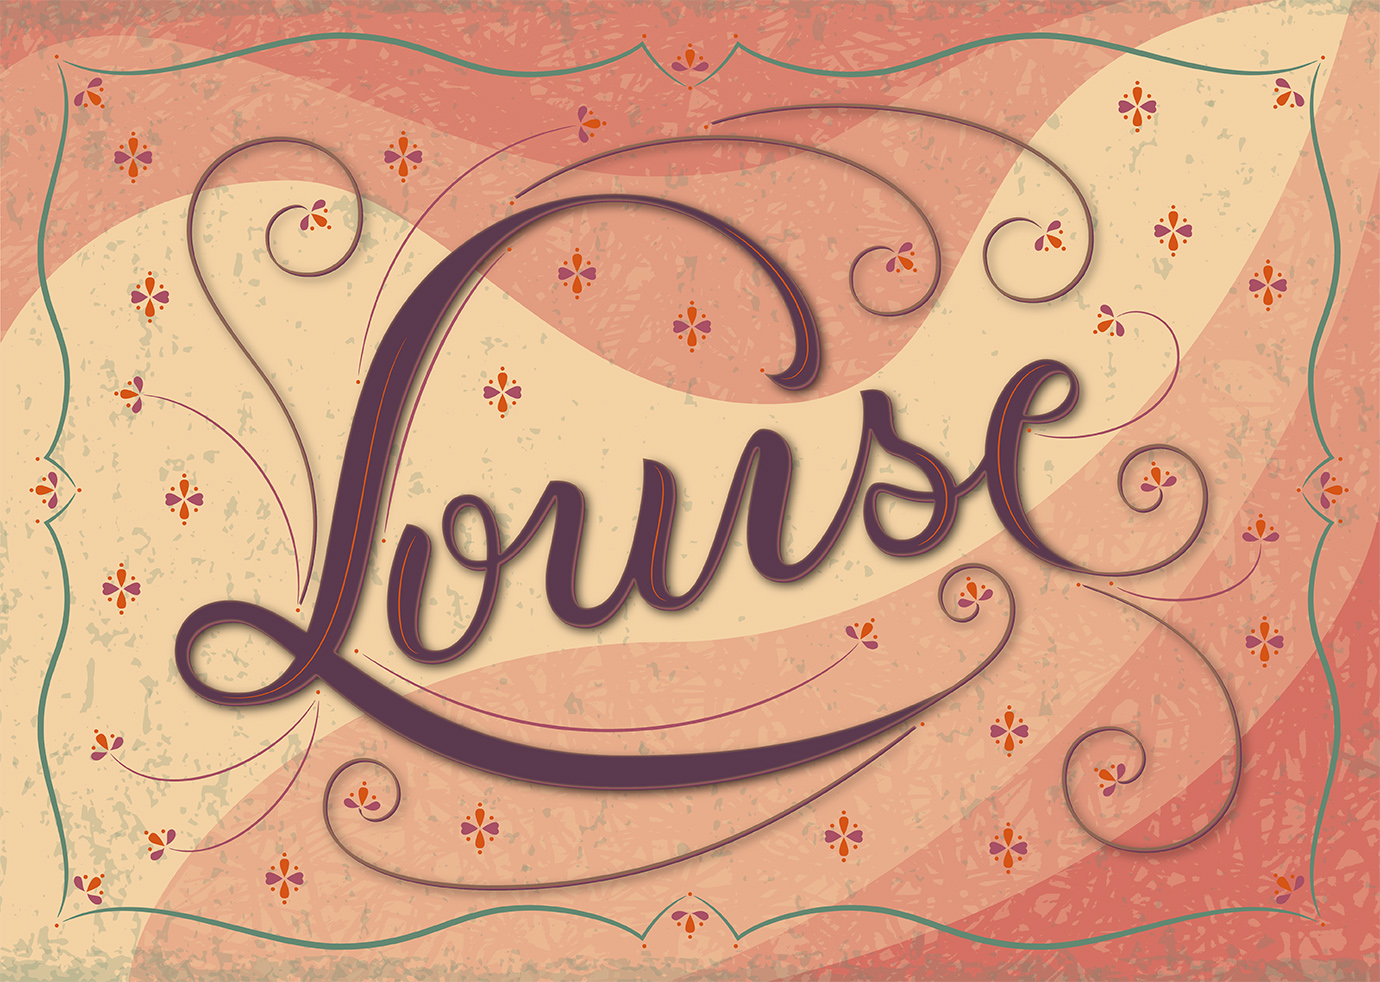 Lettering piece "Louise"